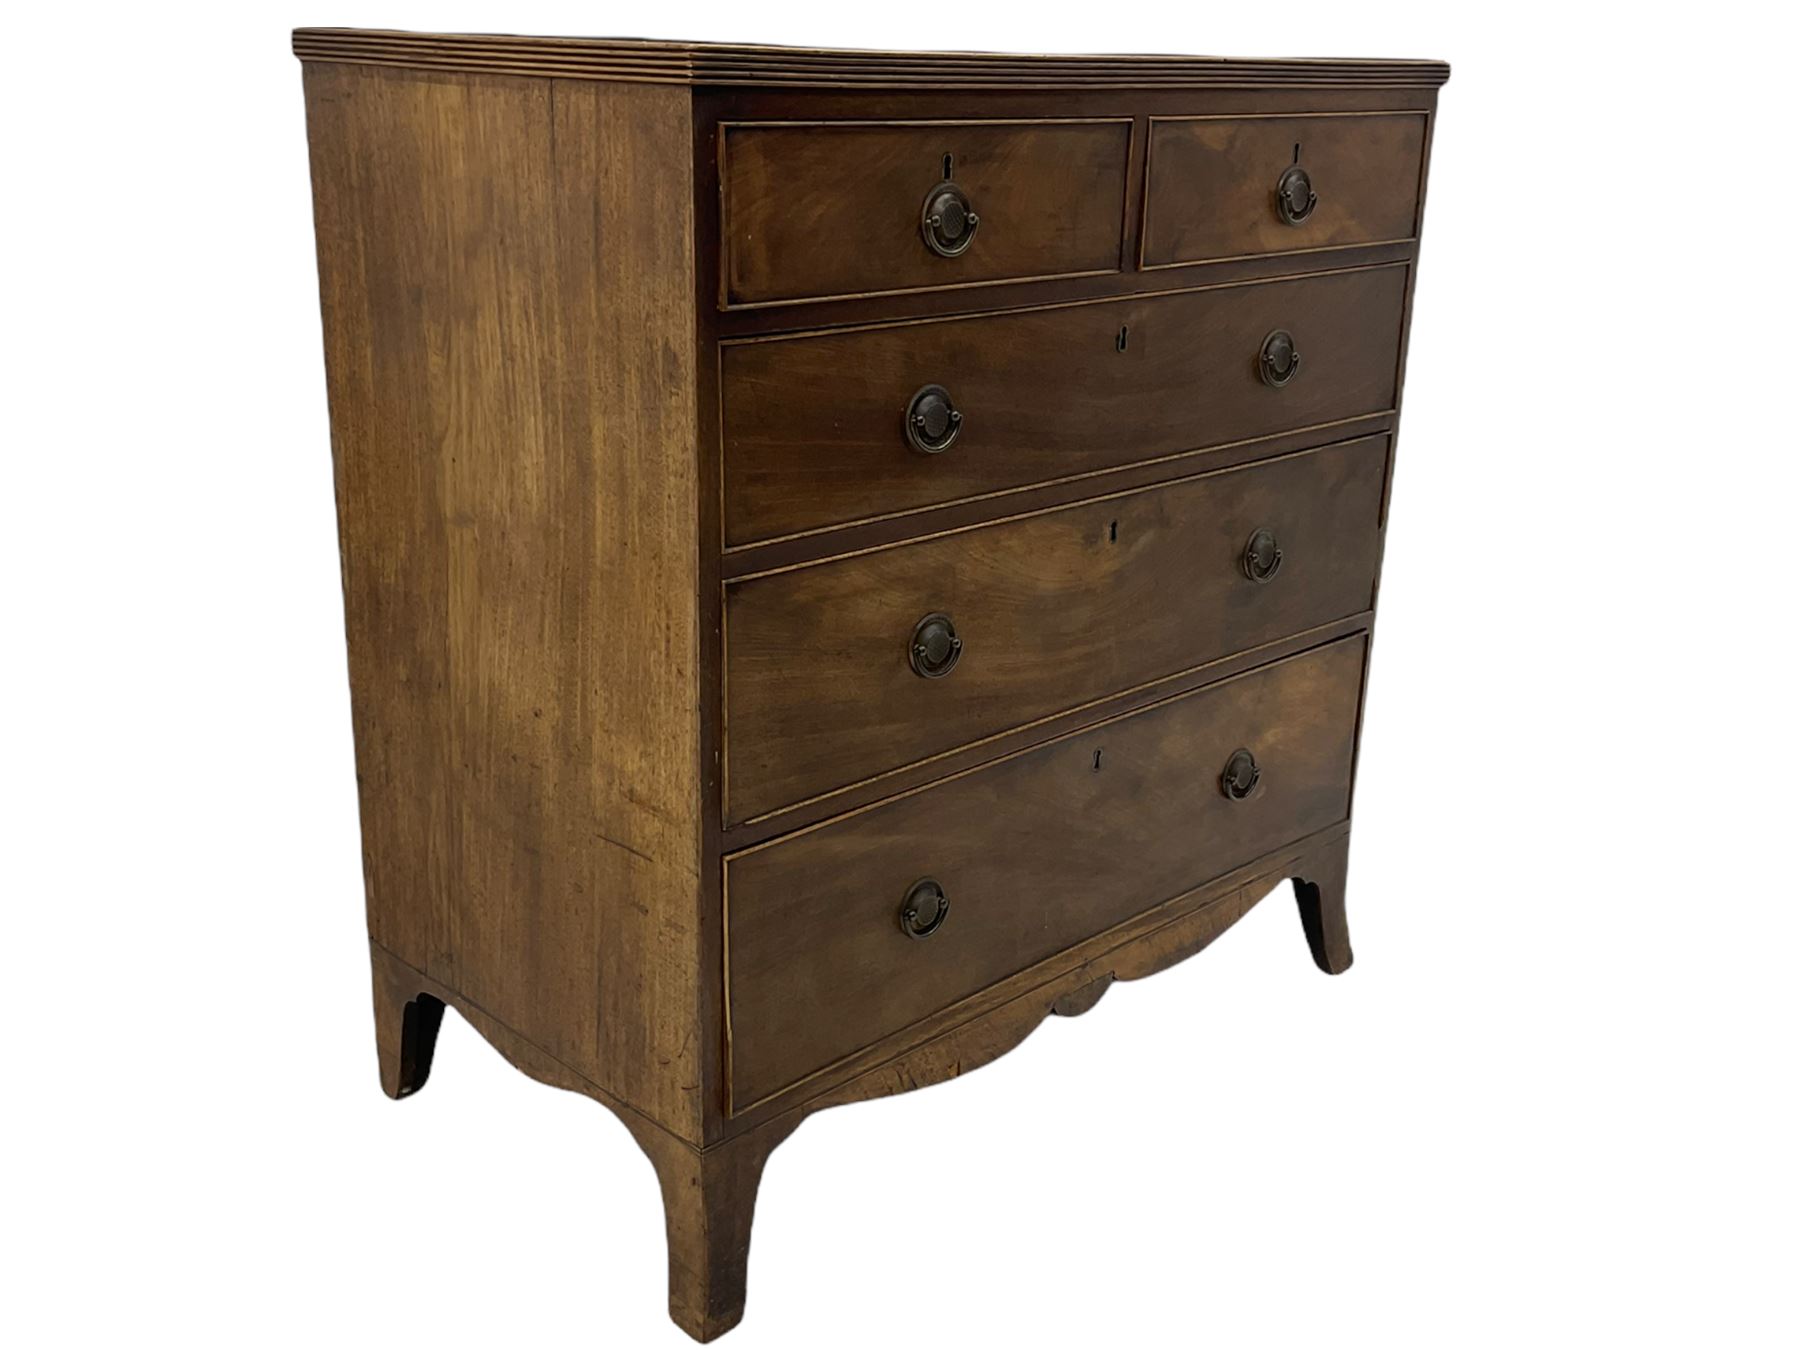 19th century mahogany chest - Image 3 of 7